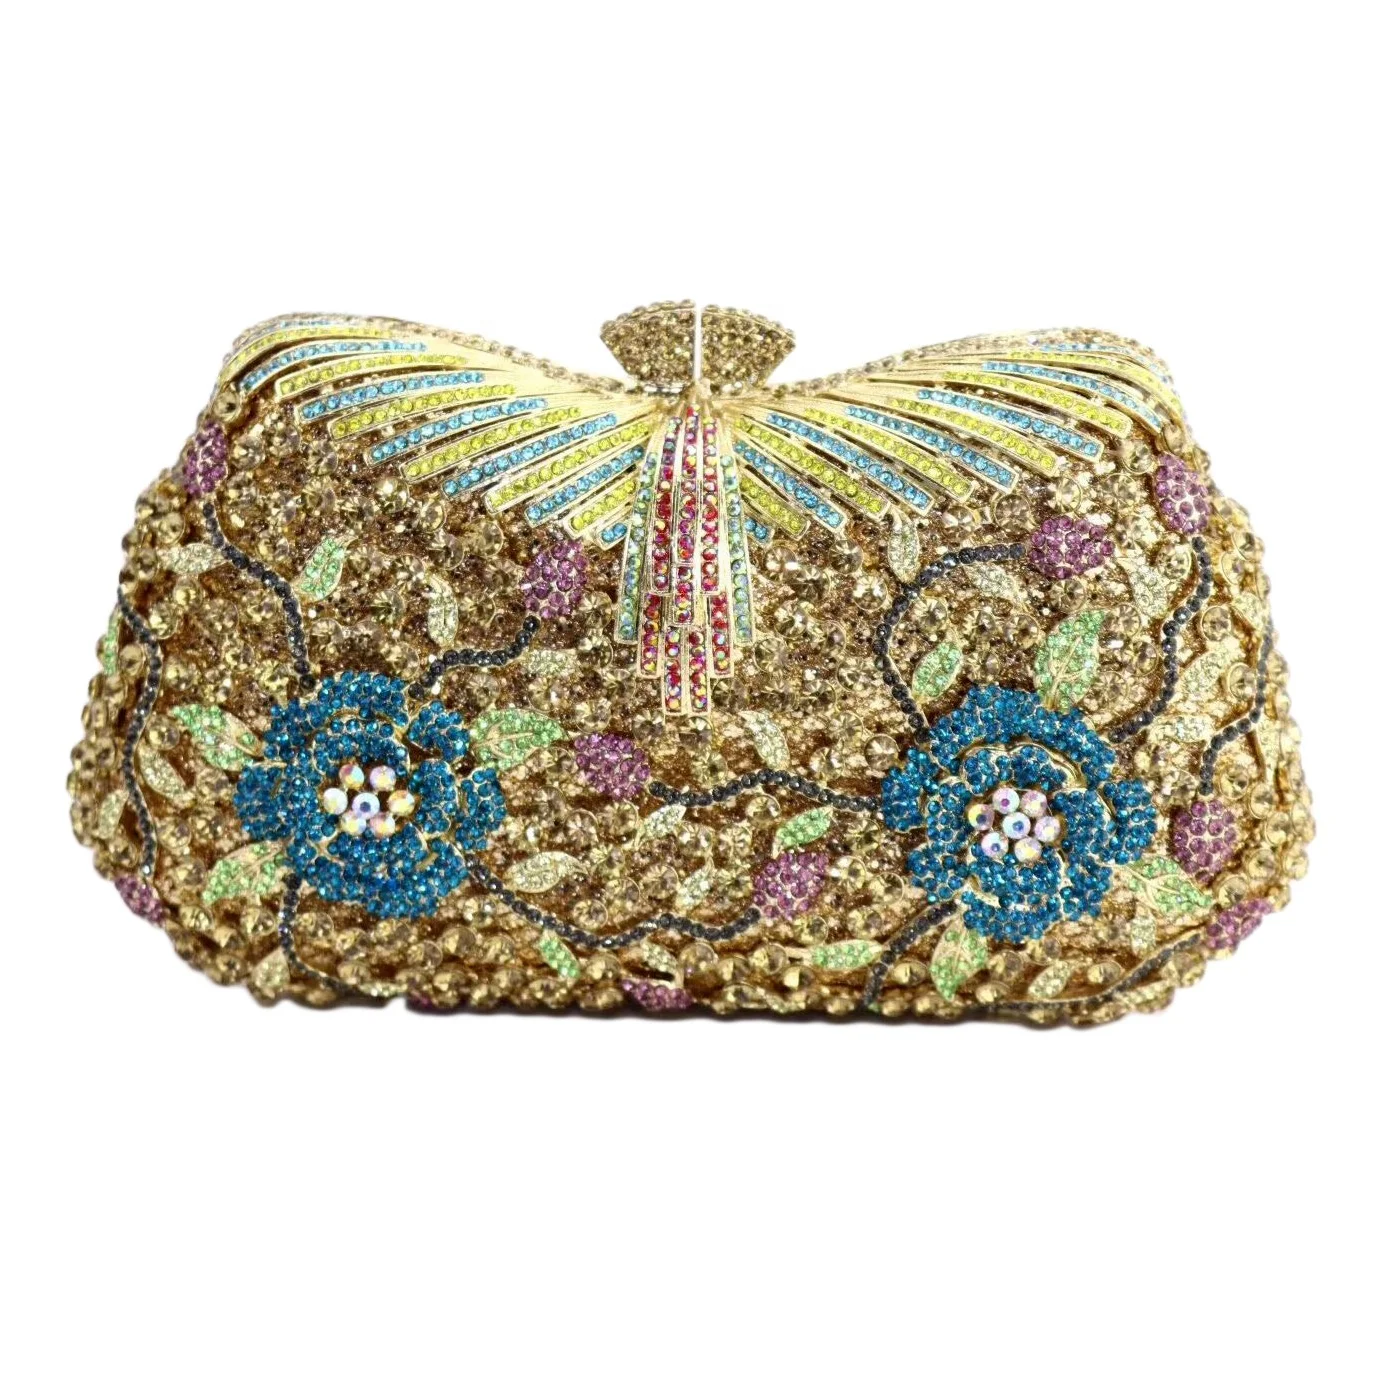 Amiqi MRY180 New Fashion Luxury Women Wedding Clutch Bag Hollow Rose Diamond Evening Bag Cosmetic Bag